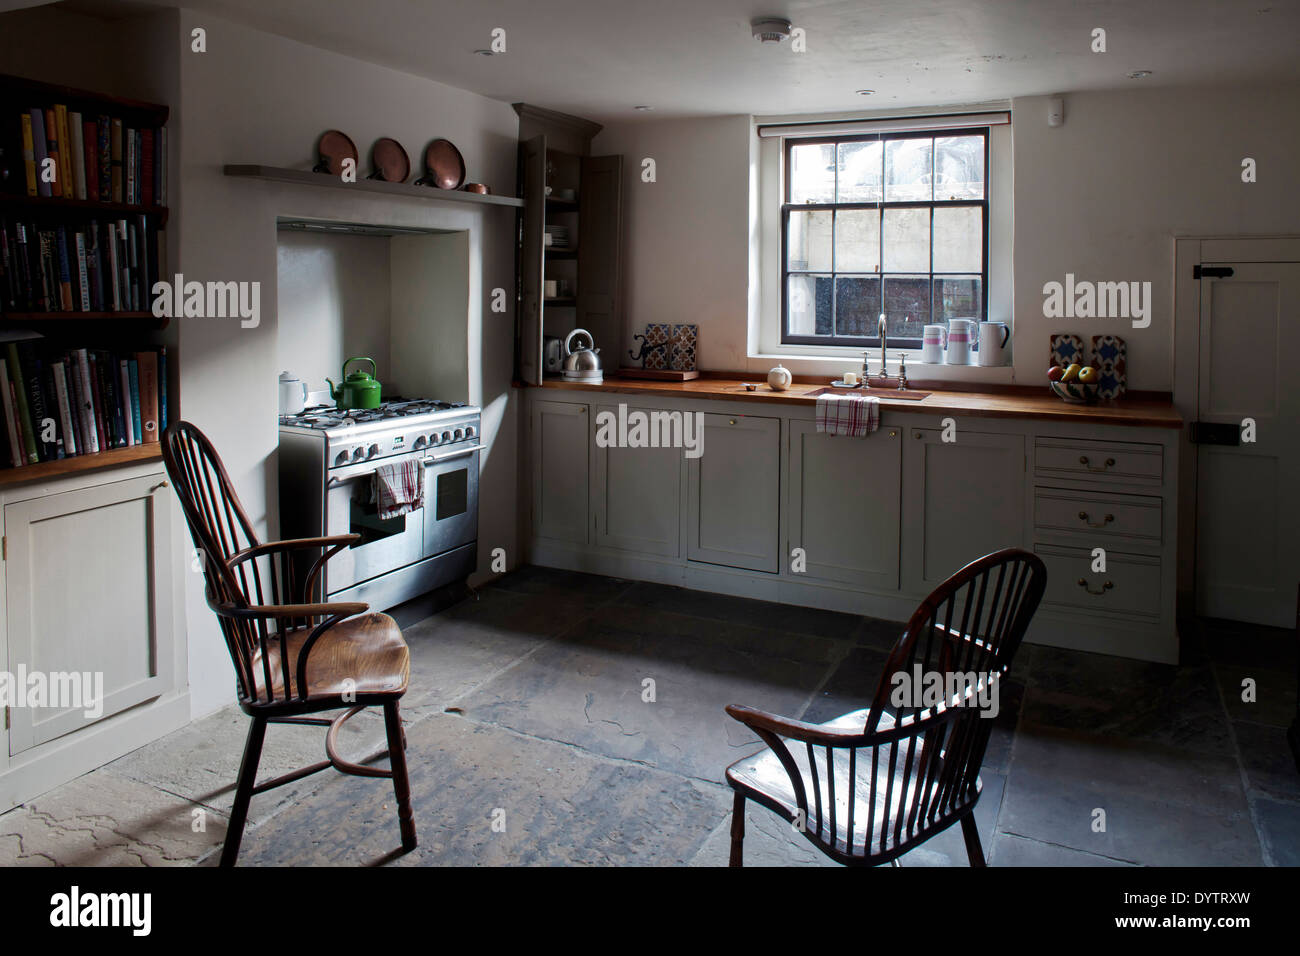 Period chairs in basement kitchen, Whitechapel, London Stock Photo